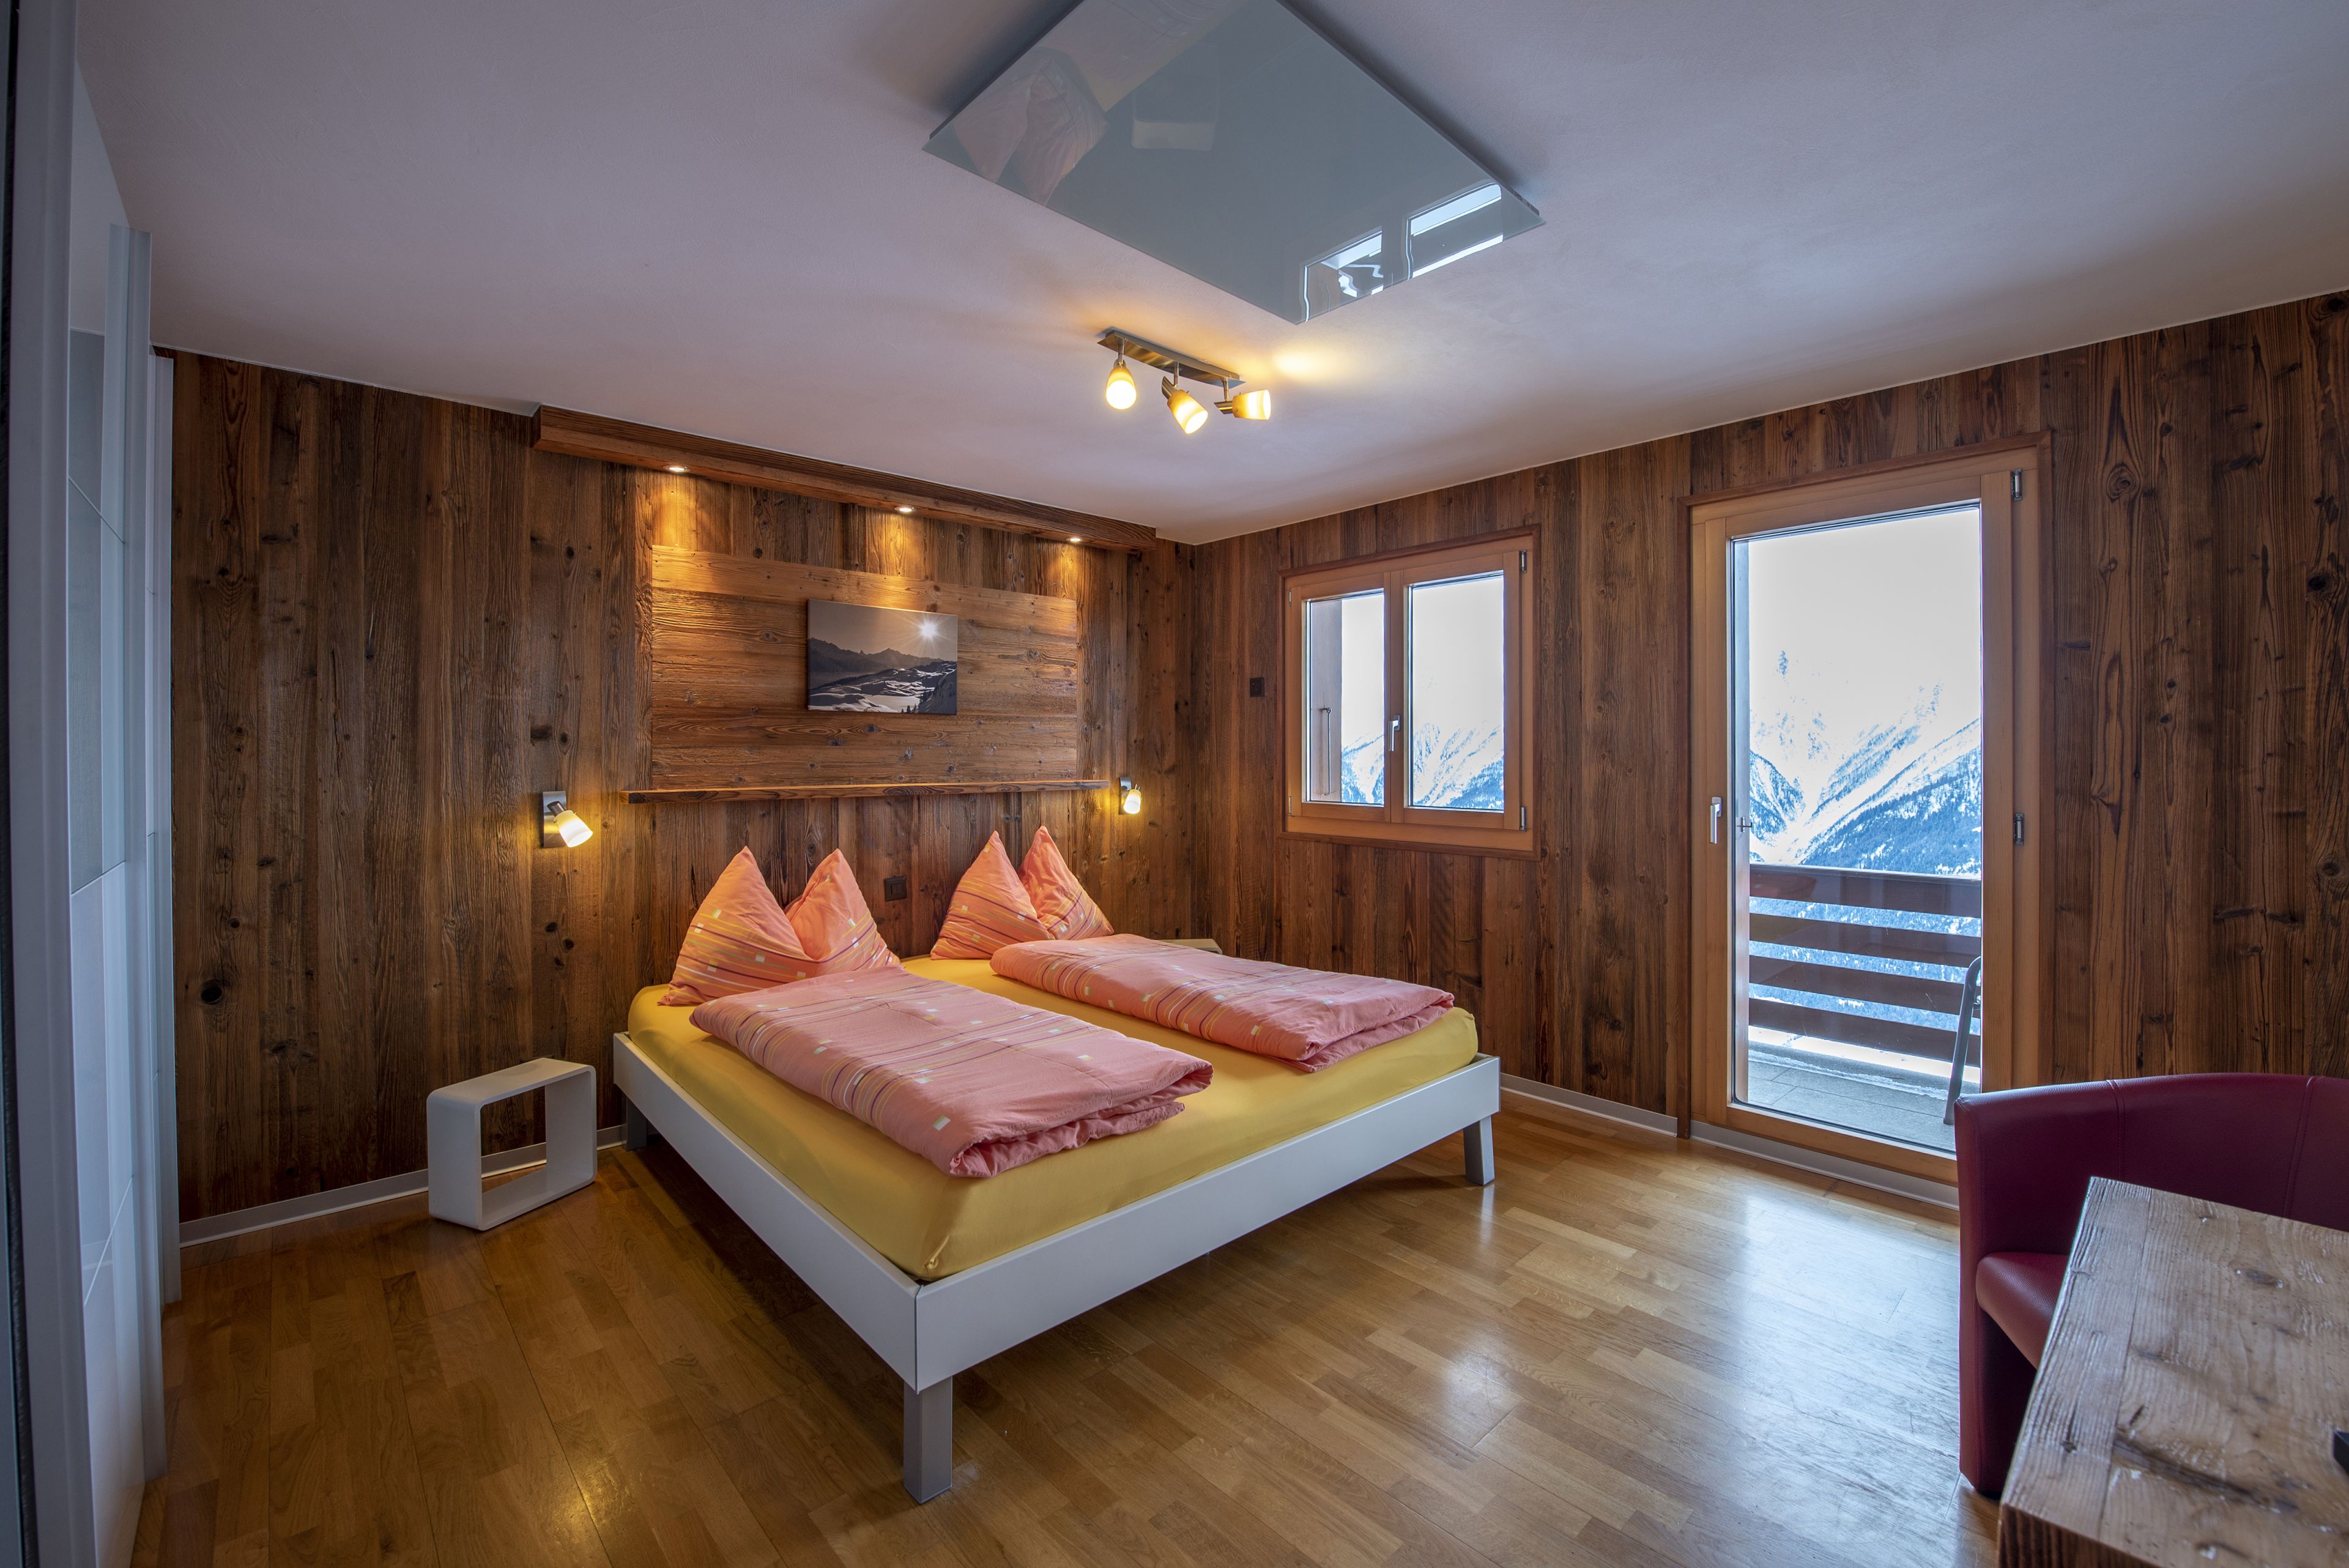 Hotel Slalom, Bettmeralp, Valais, Switzerland